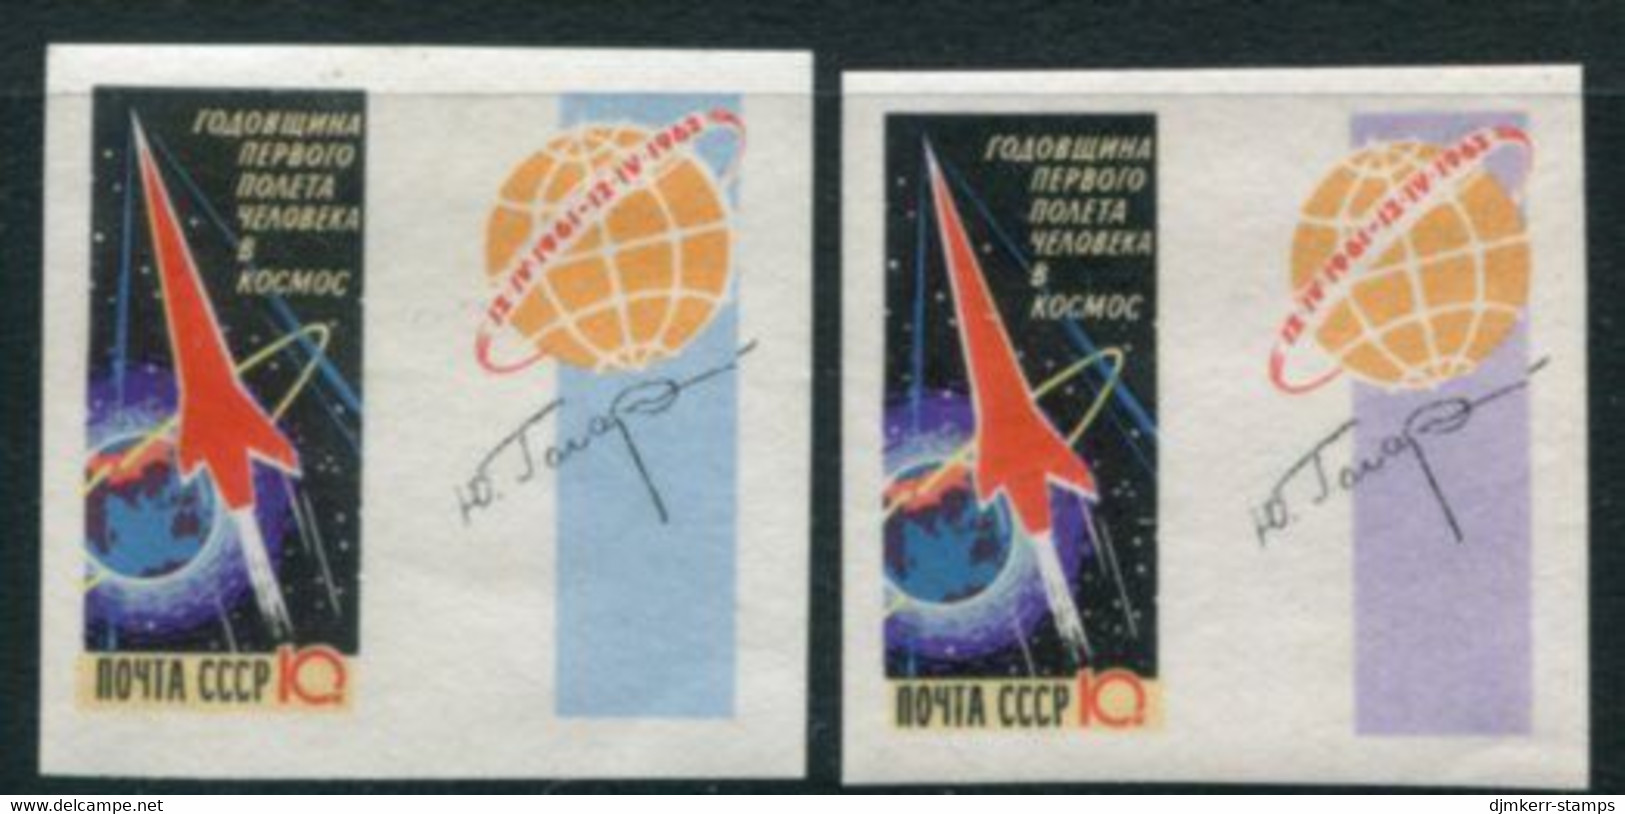 SOVIET UNION 1962 Manned Space Flight Imperforate MNH / **.  Michel 2587a-b B - Nuovi